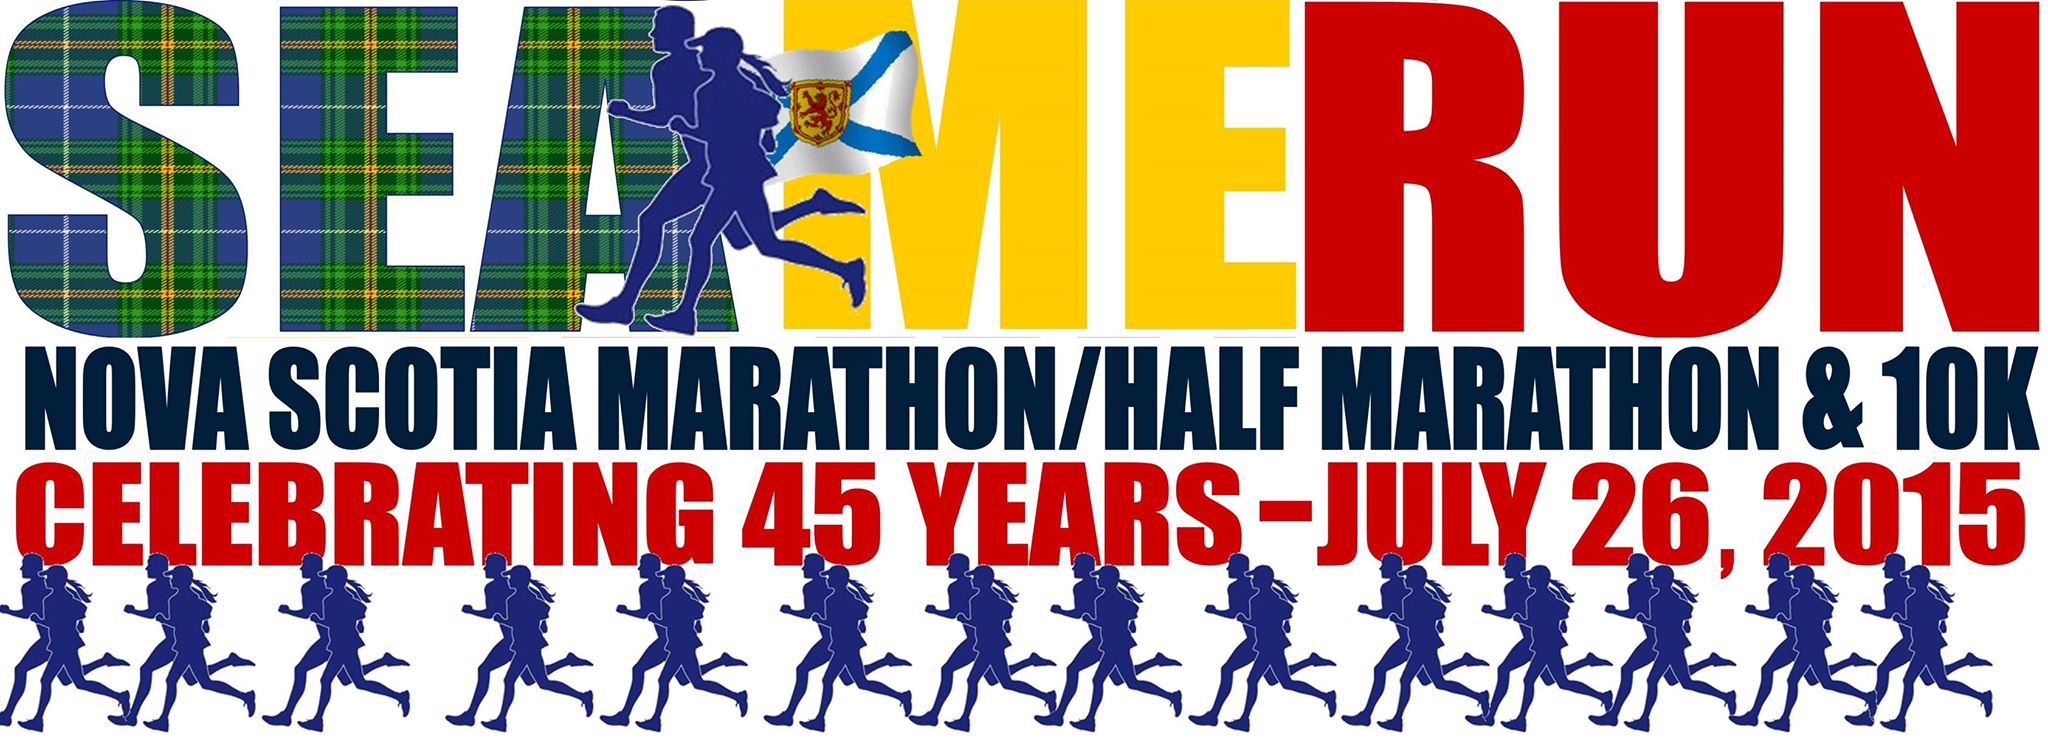 Registration is Open for the 45th Annual Nova Scotia Marathon Half Marathon and 10 km